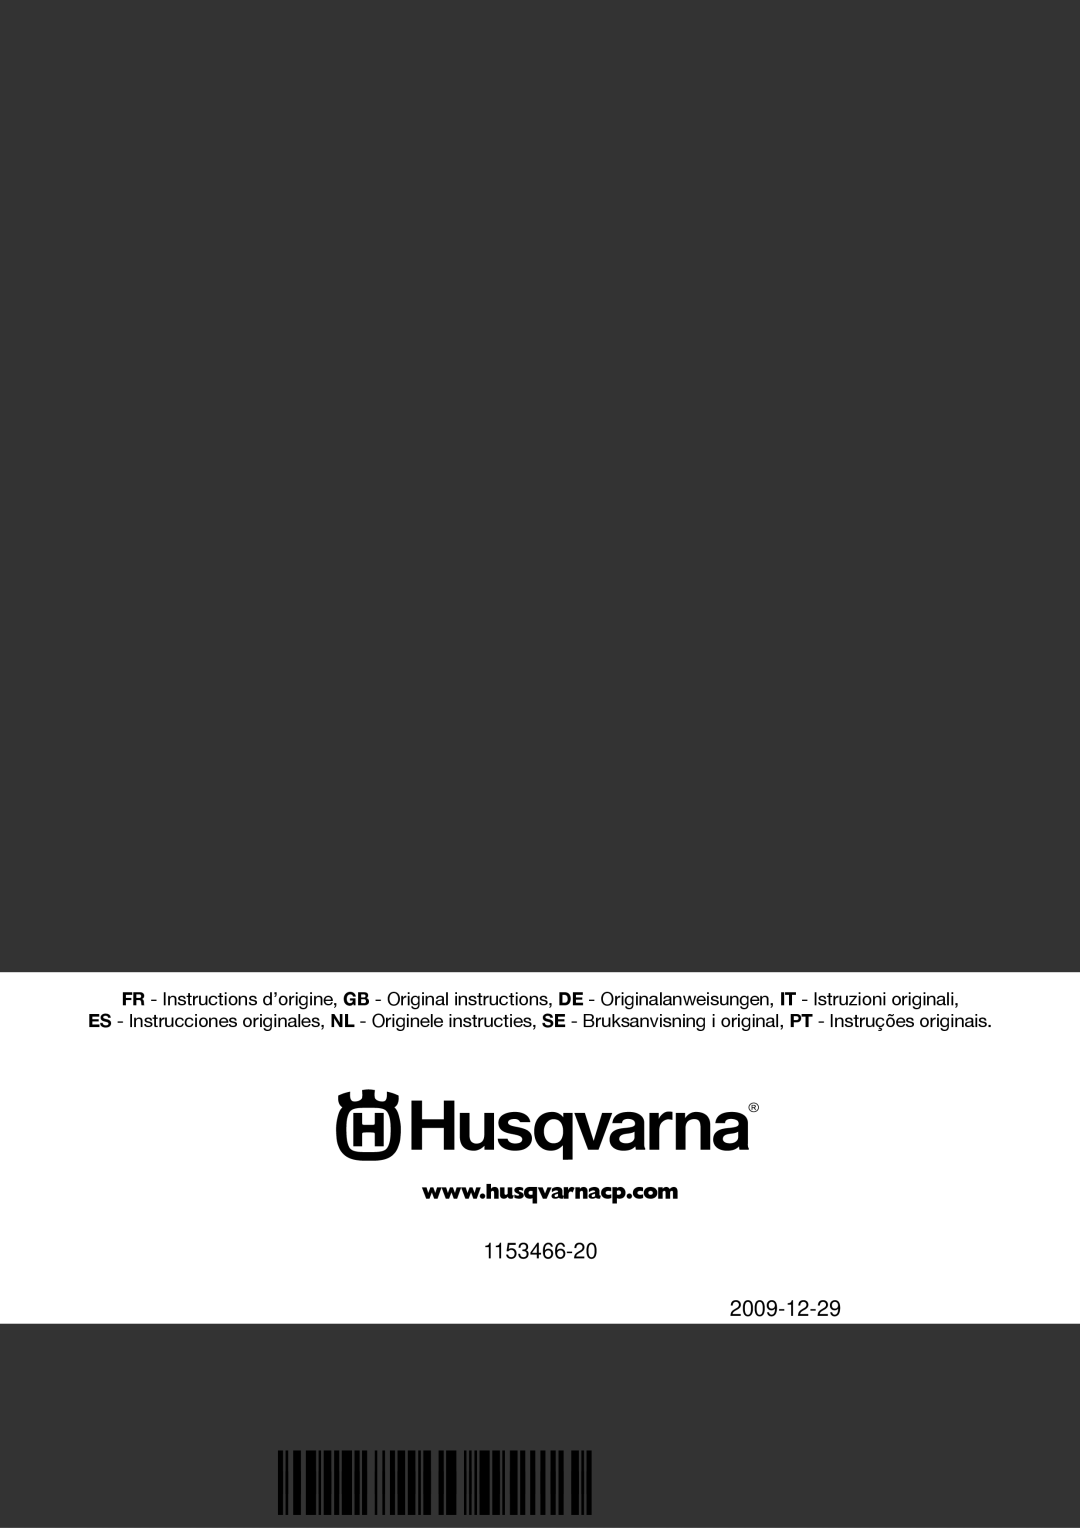 Husqvarna FS309, FS 305 manuel dutilisation ´z+UN¶0¨ ´z+UN¶0¨, 1153466-20 2009-12-29 